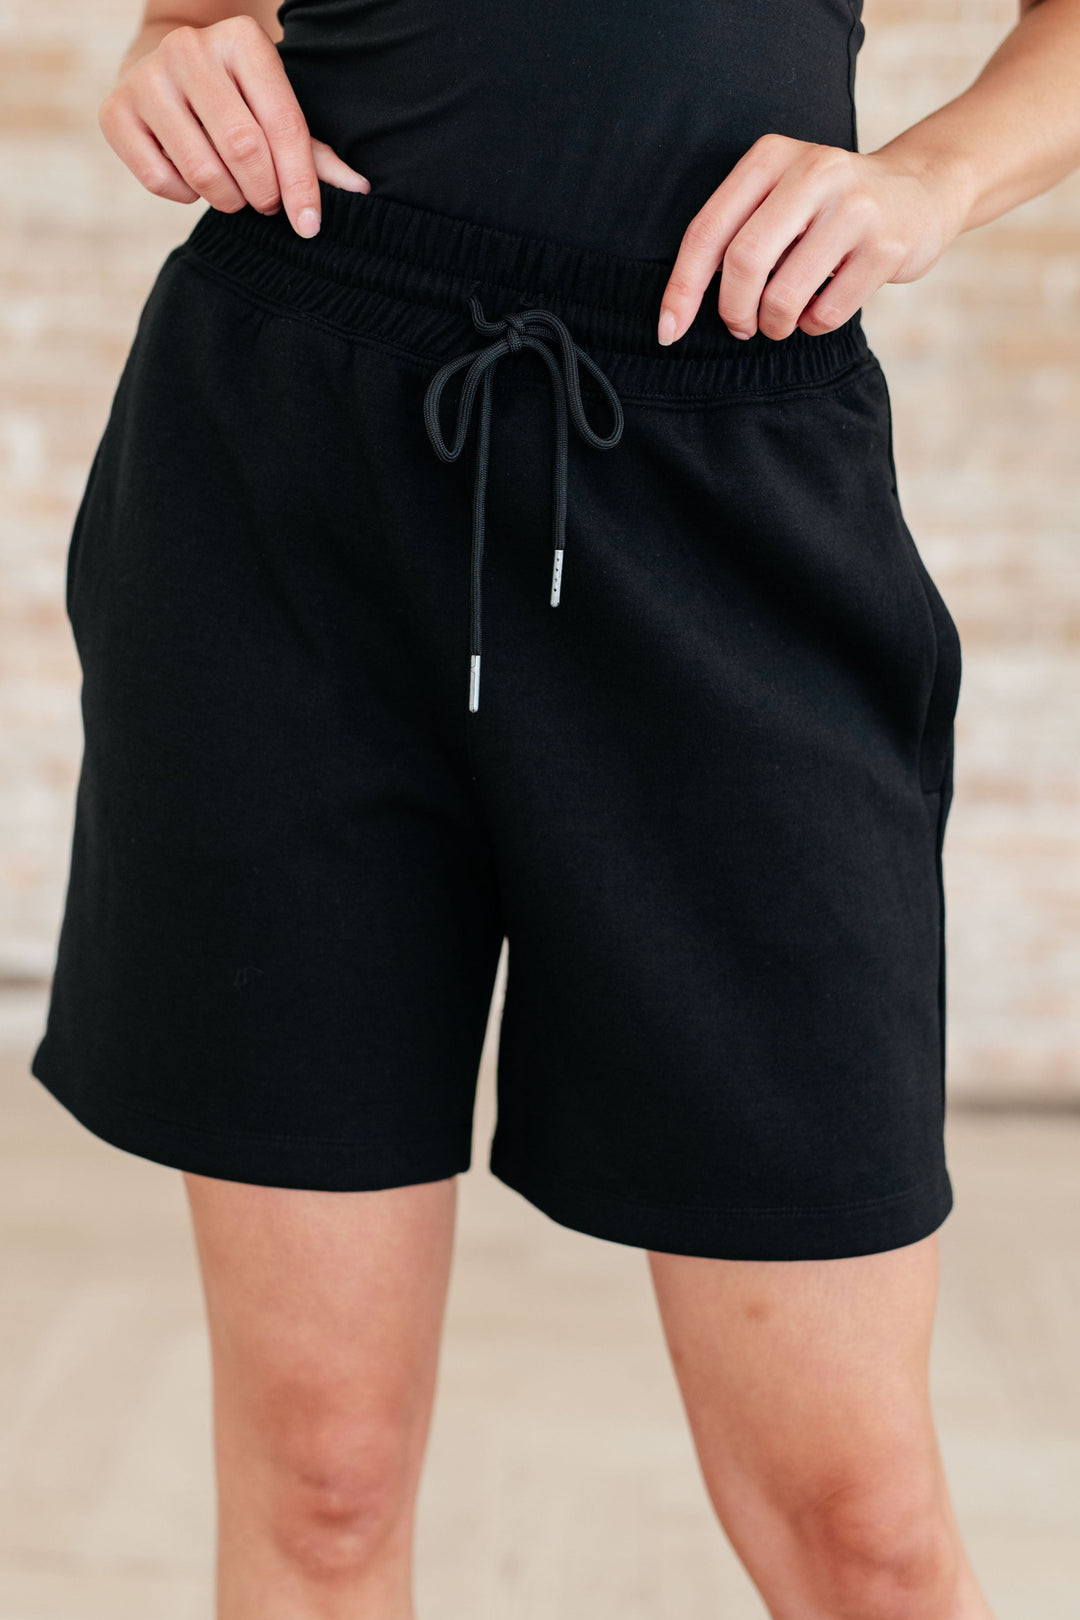 Settle In Dad Shorts in Black-Shorts-Krush Kandy, Women's Online Fashion Boutique Located in Phoenix, Arizona (Scottsdale Area)